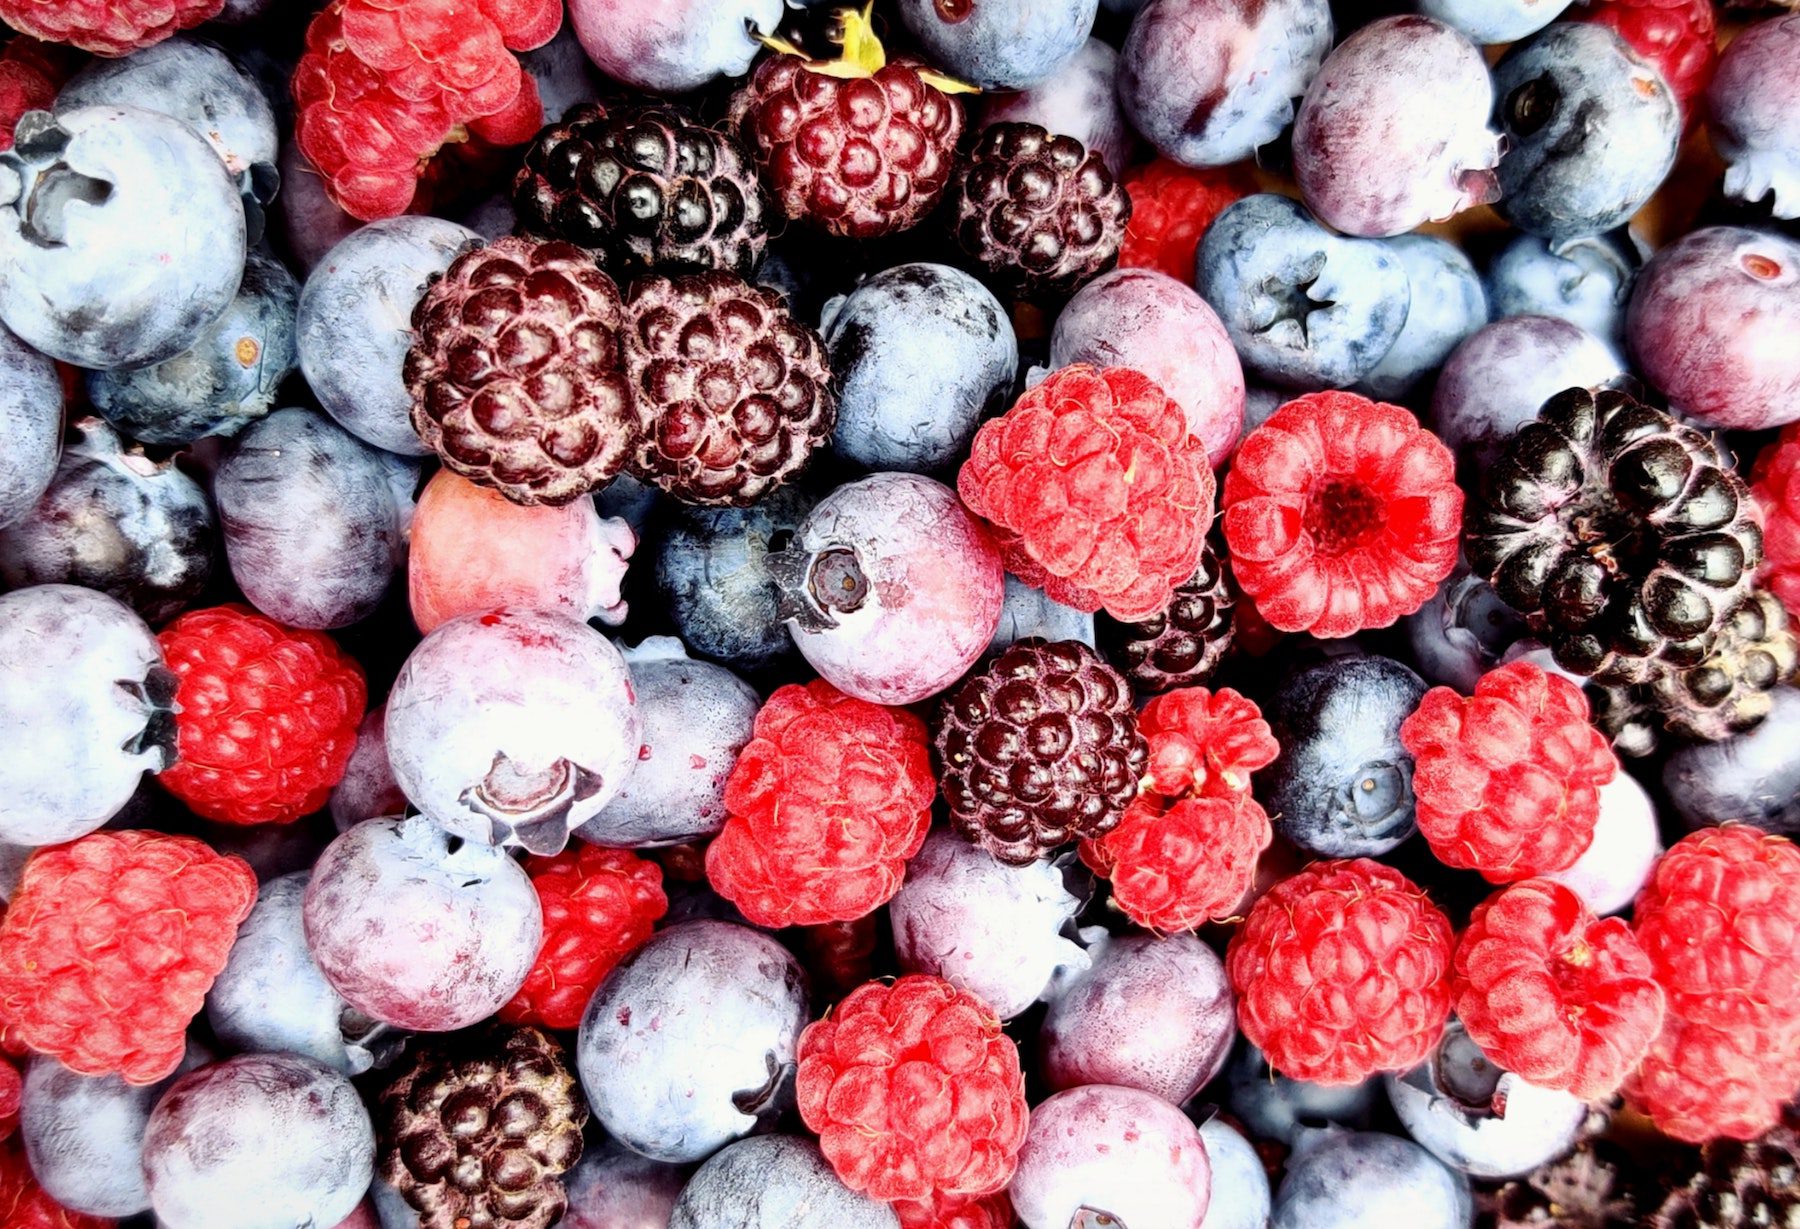 Close-up of mixed berries including blueberries, blackberries, and raspberries.